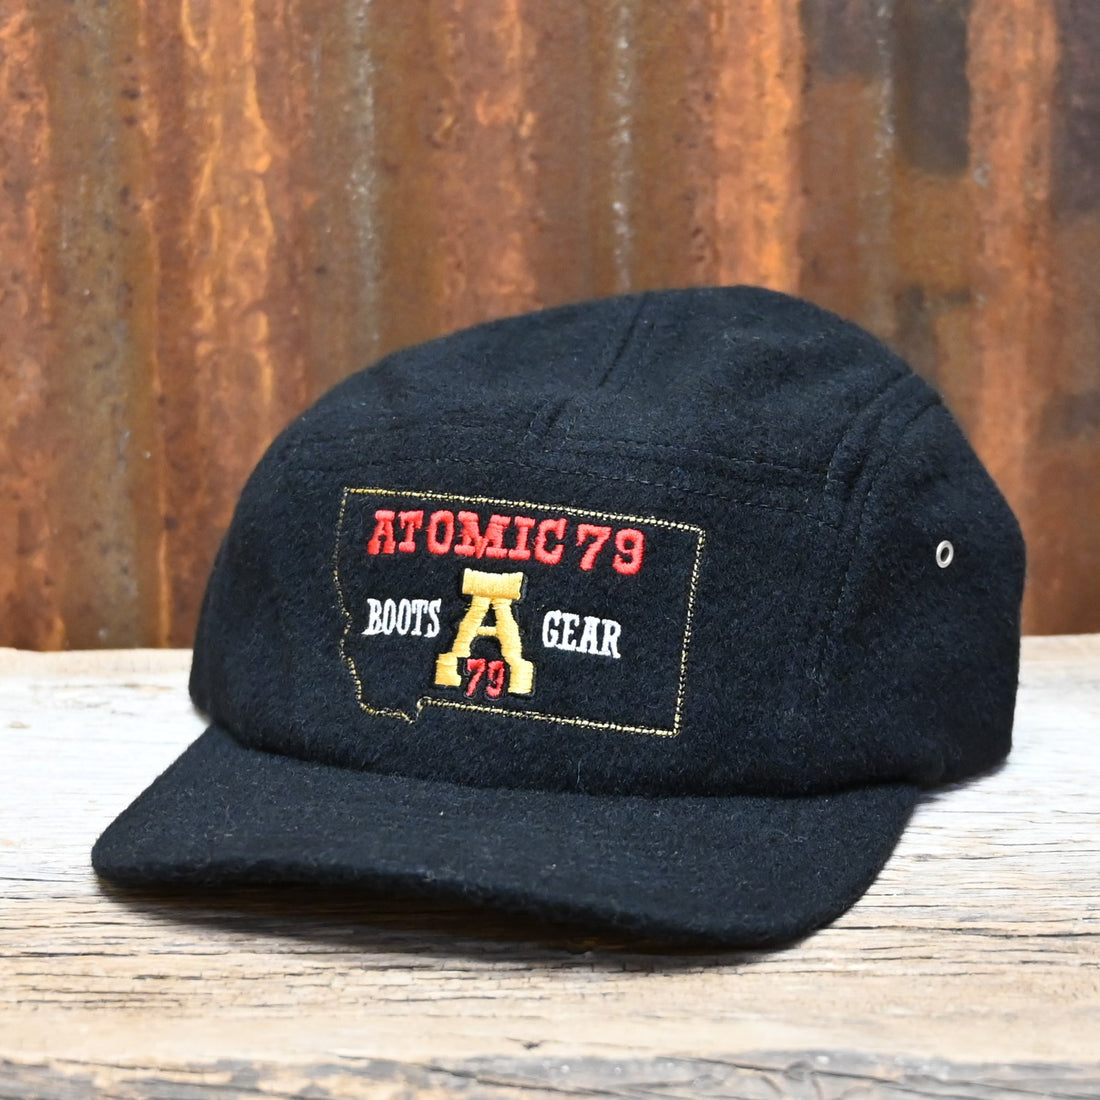 Atomic 79 Black Wool Cap W/Mt Emblem view of hat